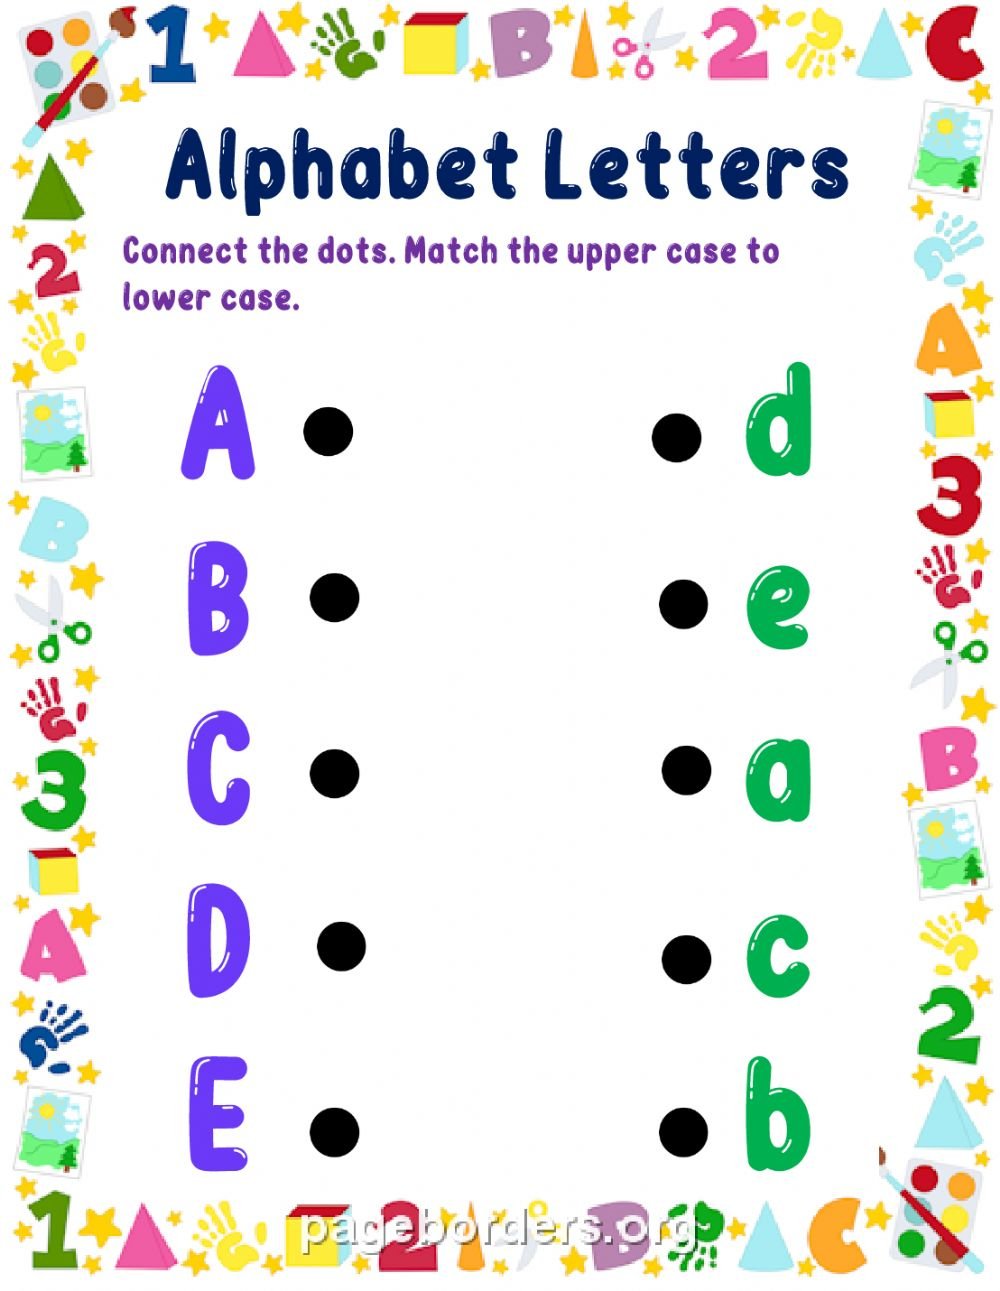 Alphabet Letters Worksheet - Free Printable